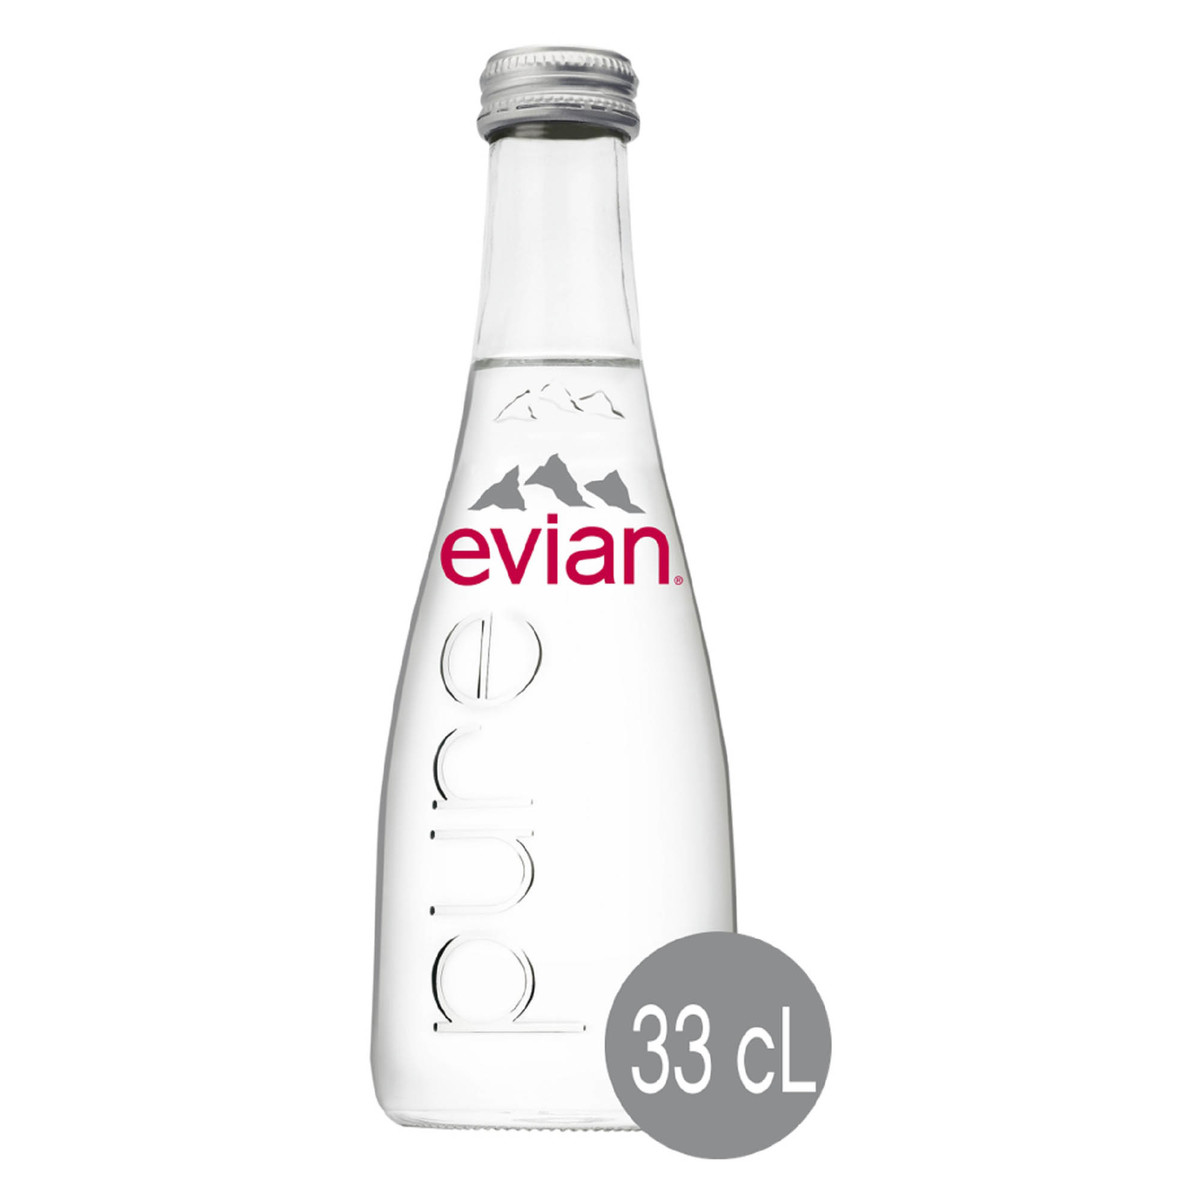 Water evian Evian Experience